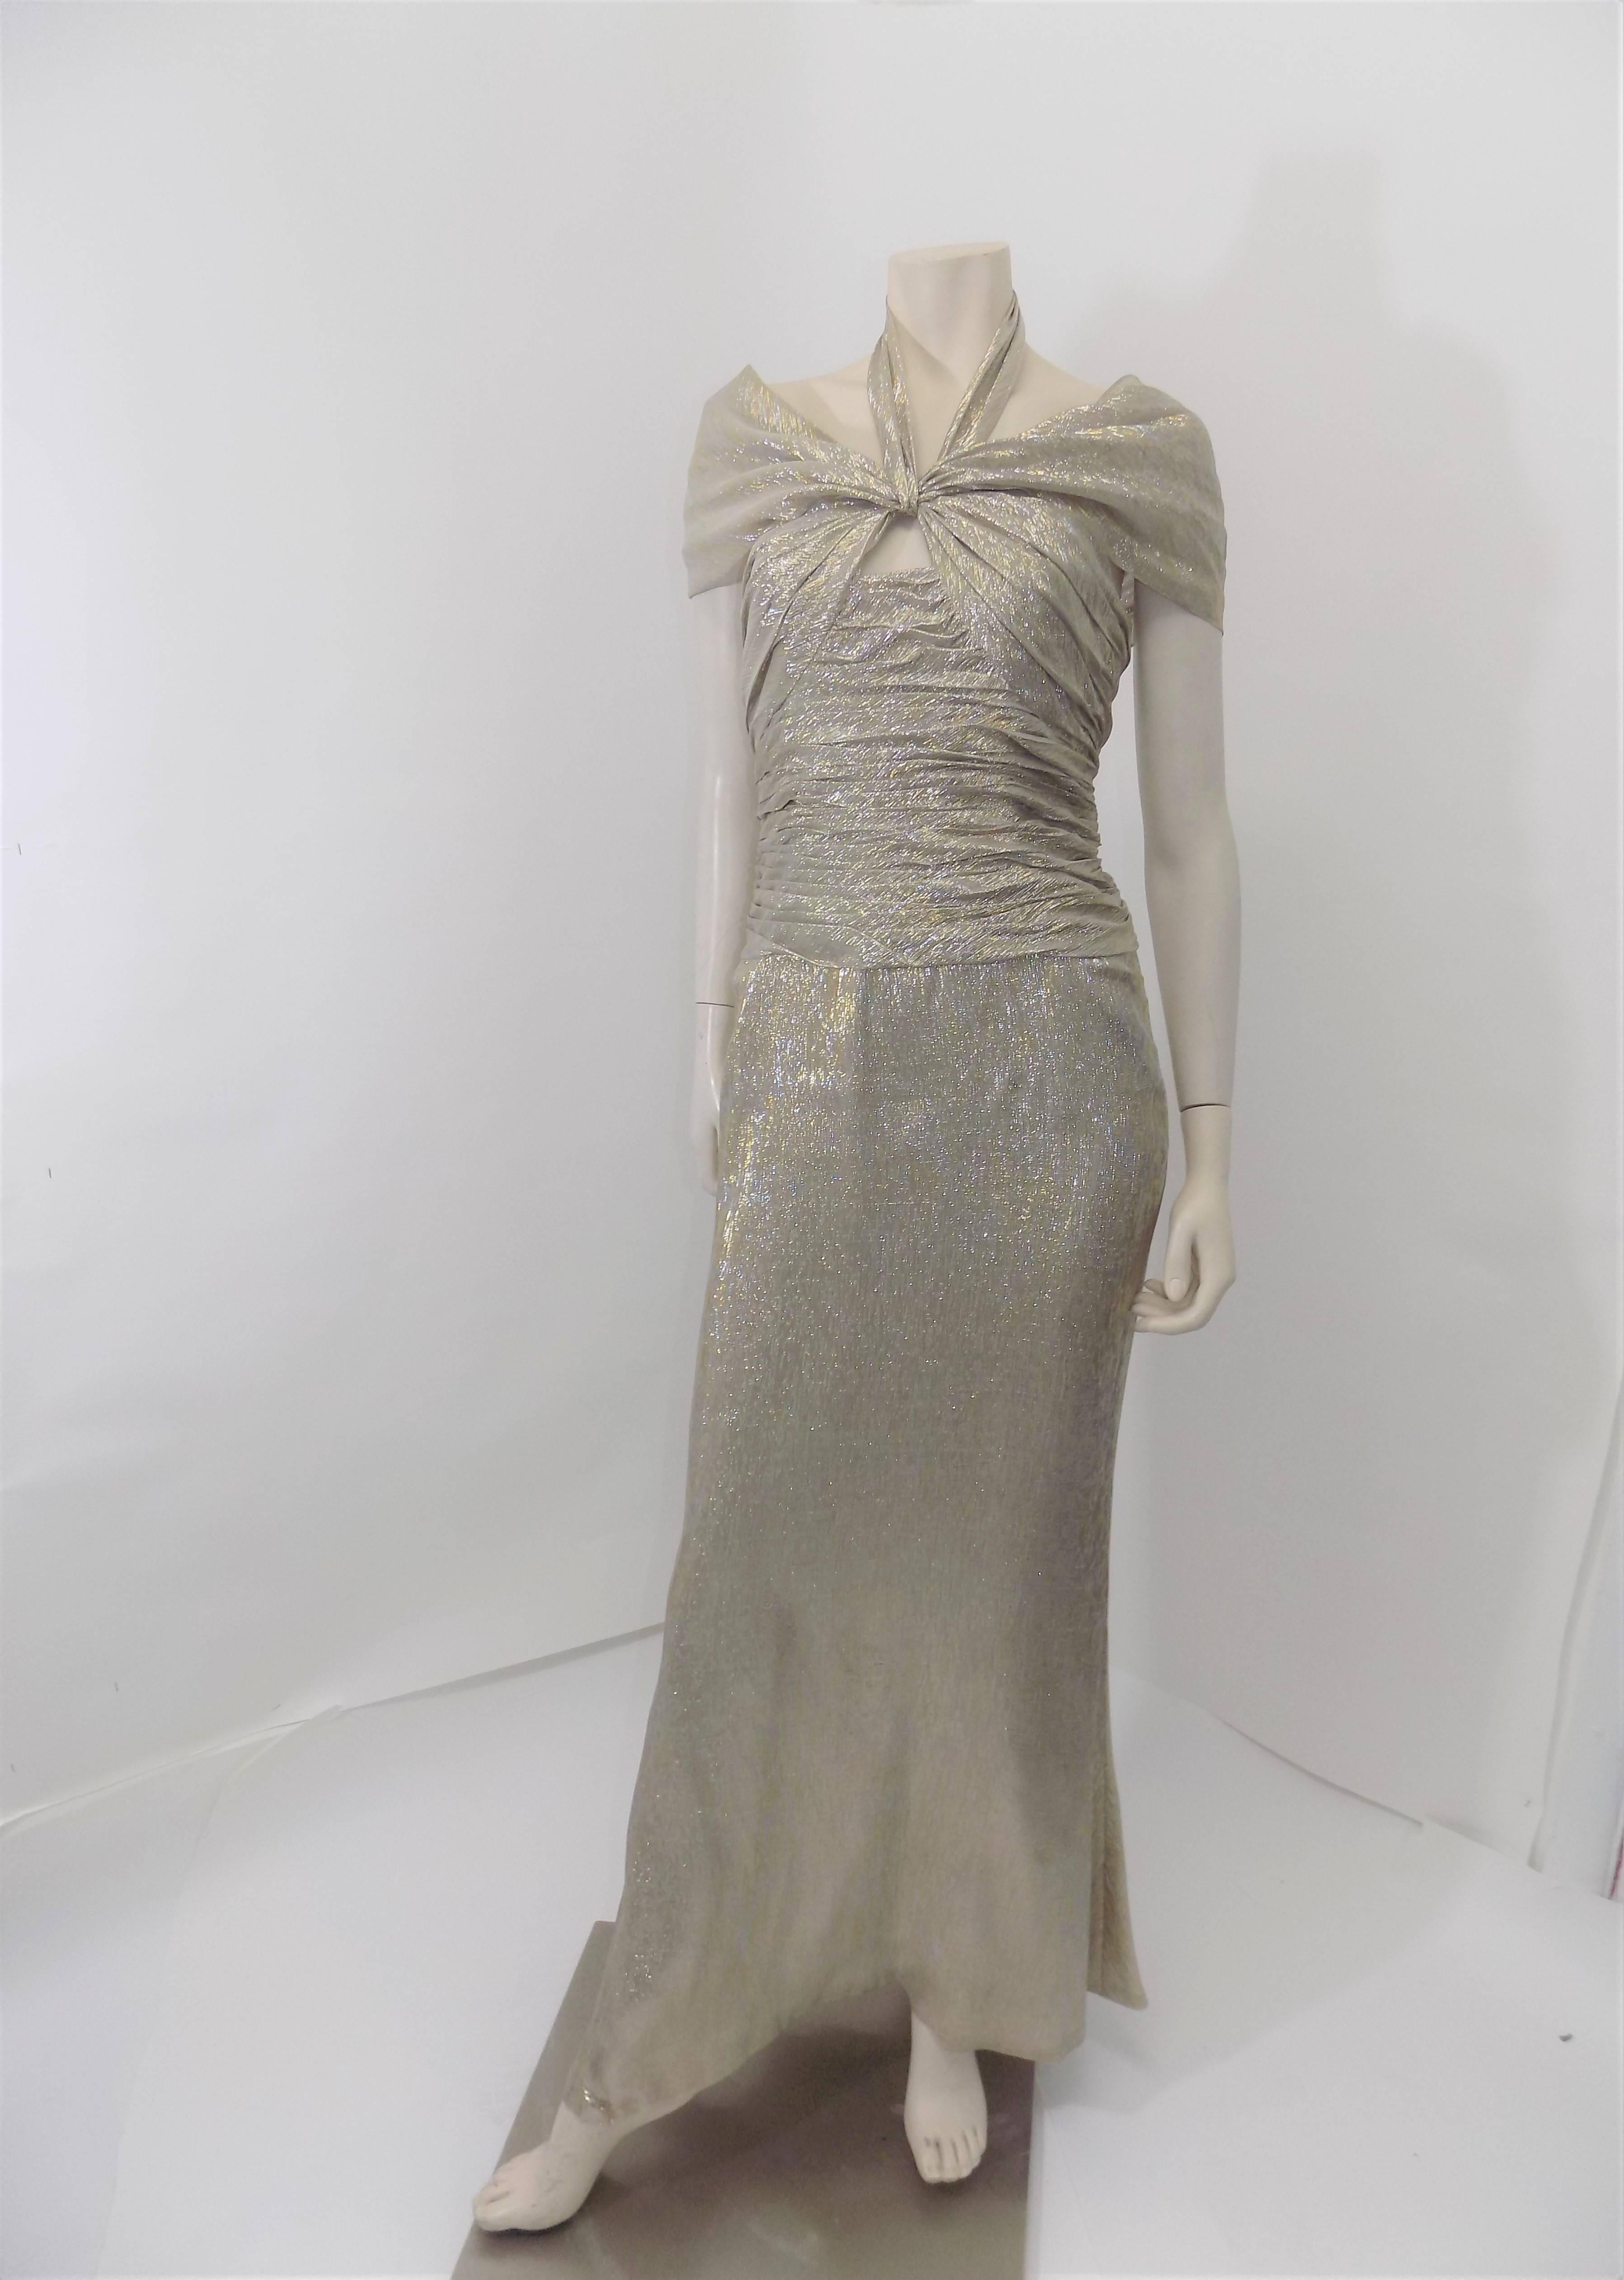 Gray Oscar de la Renta's gold metallic gown sz 8 For Sale